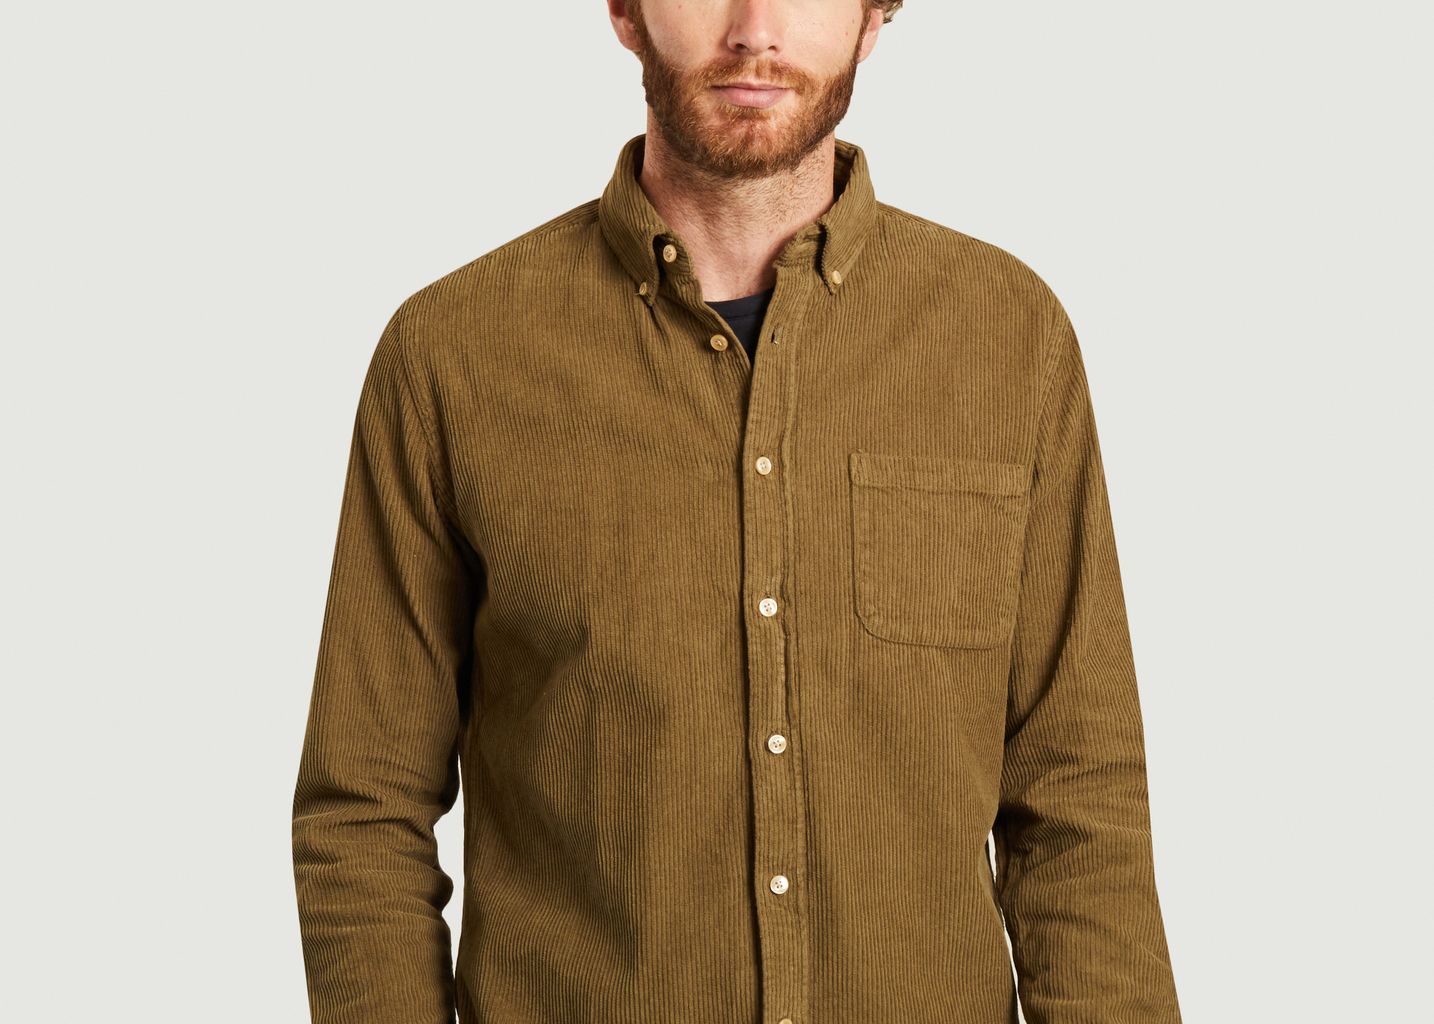 Lobo corduroy shirt - Portuguese Flannel